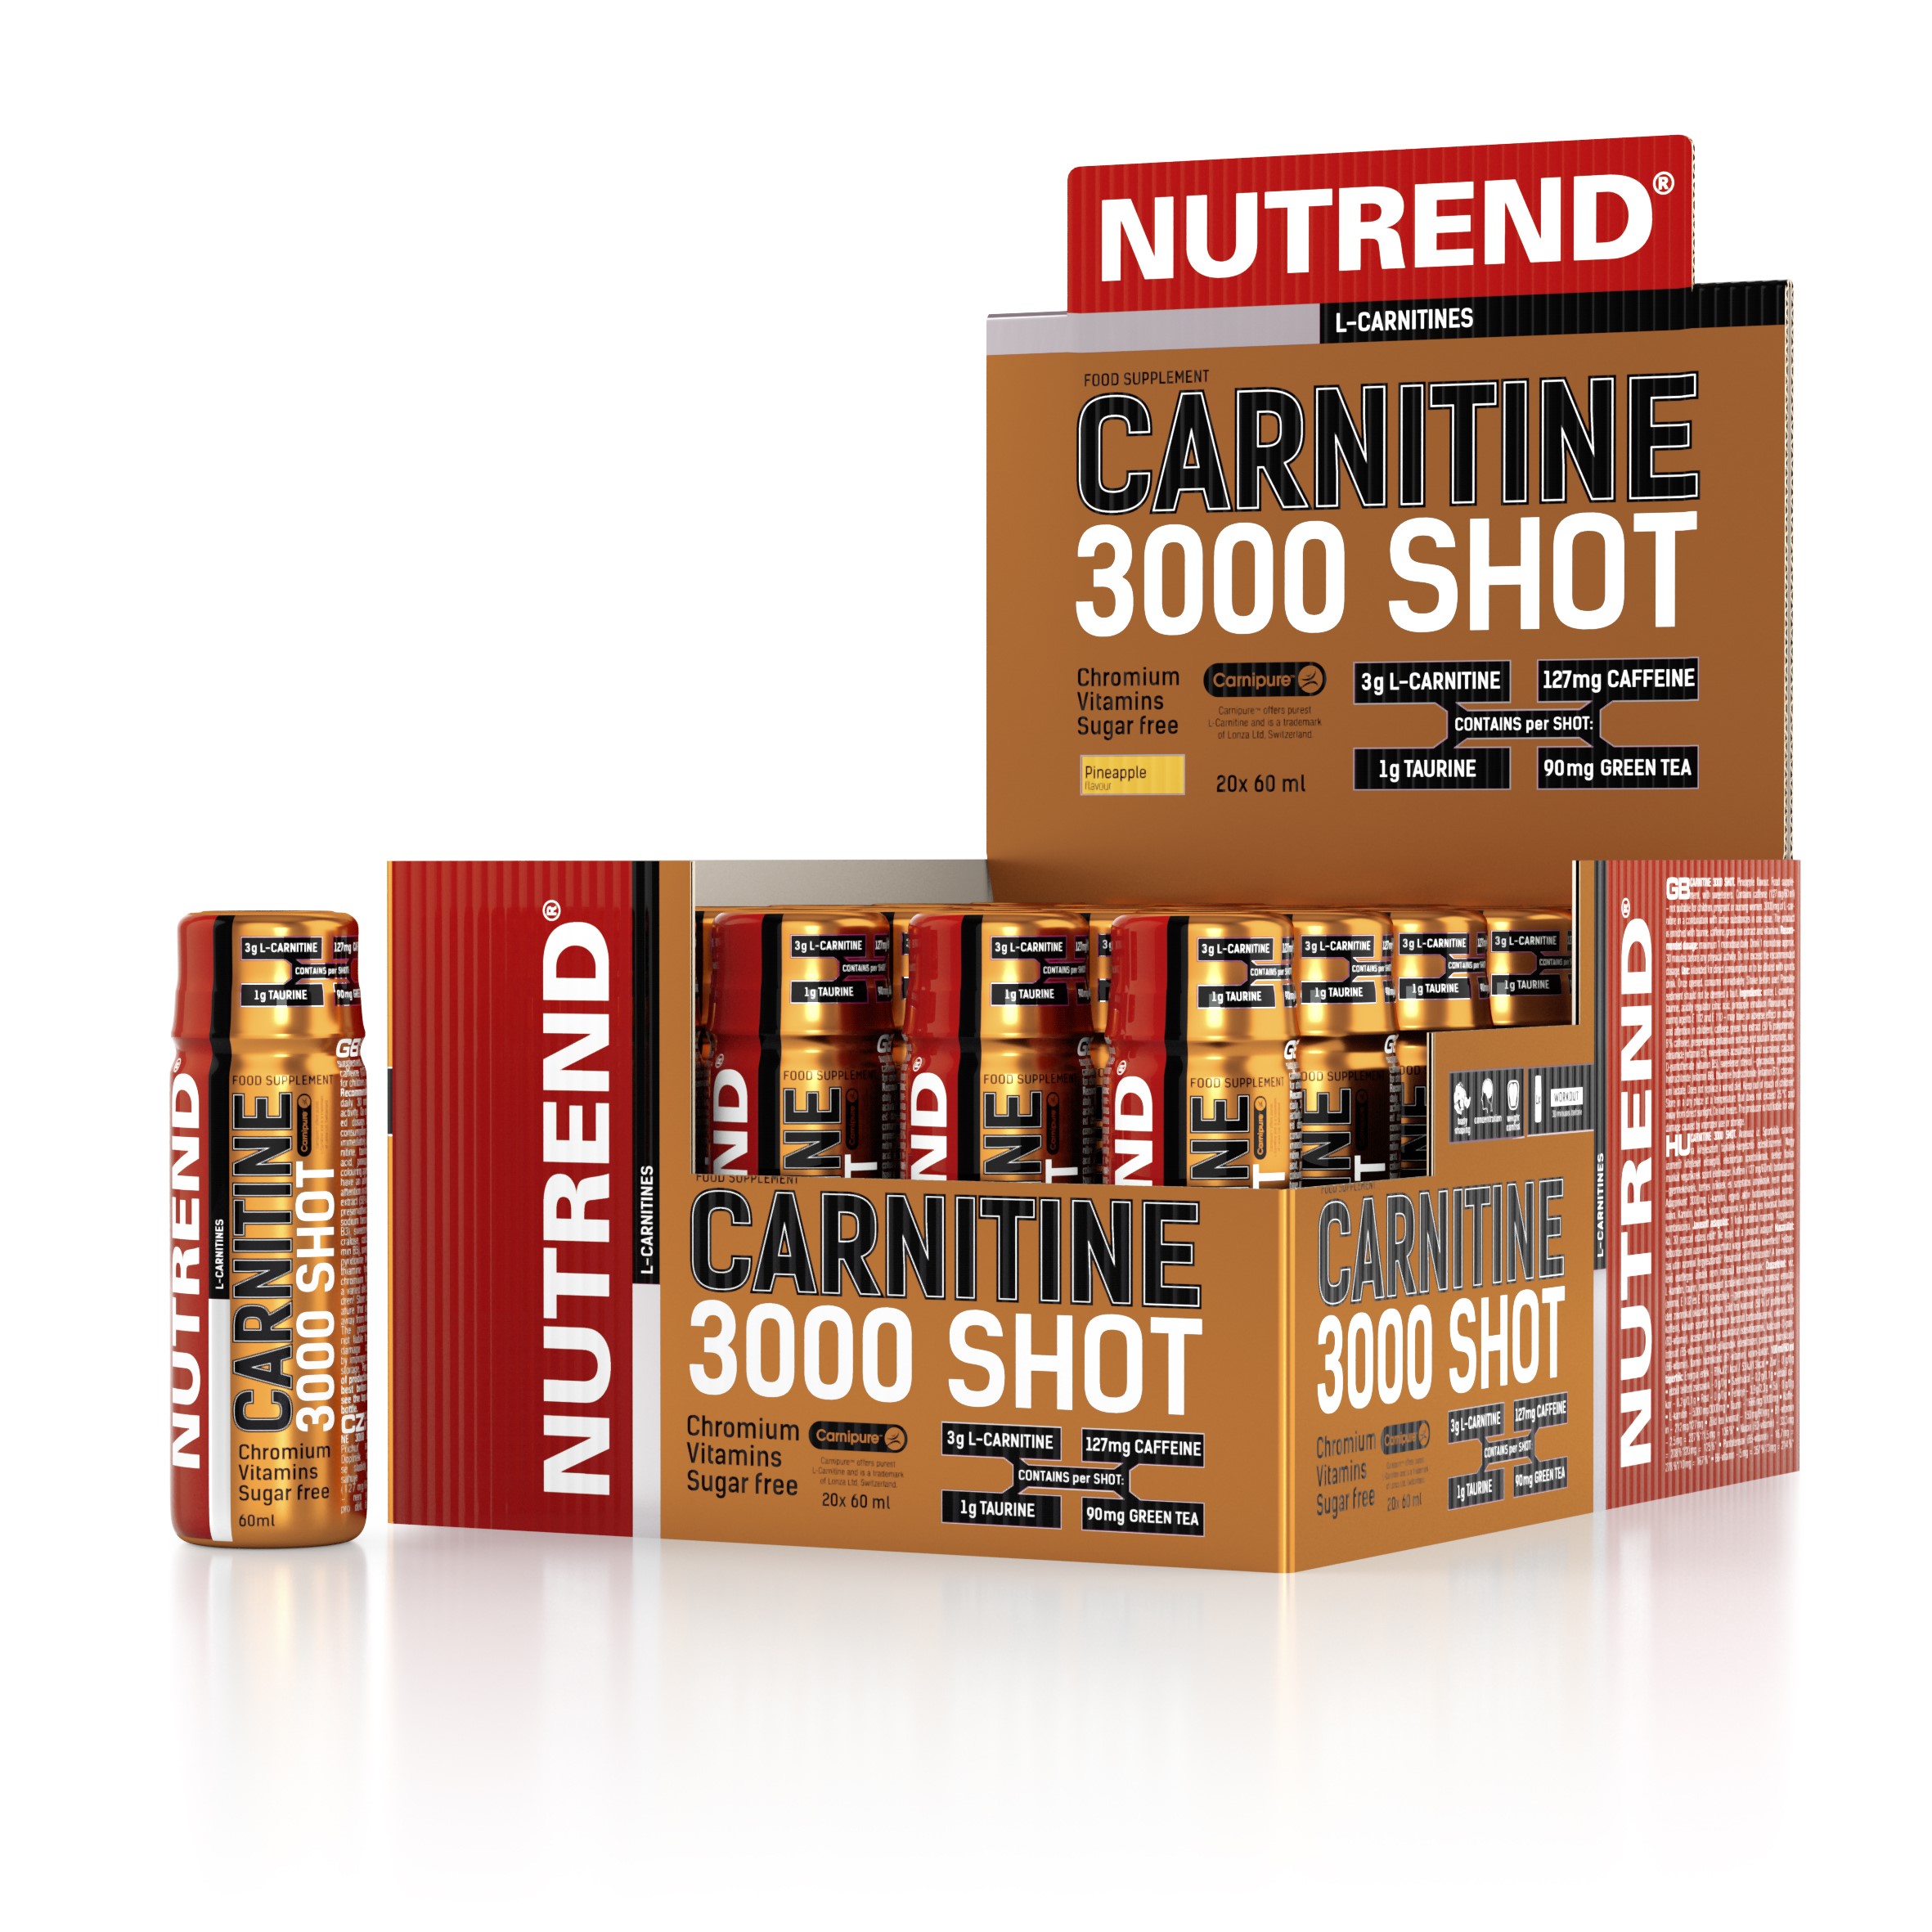 L-Carnitina - CARNITINE 3000 SHOT 60 ml Pineapple, https:0769429911.websales.ro